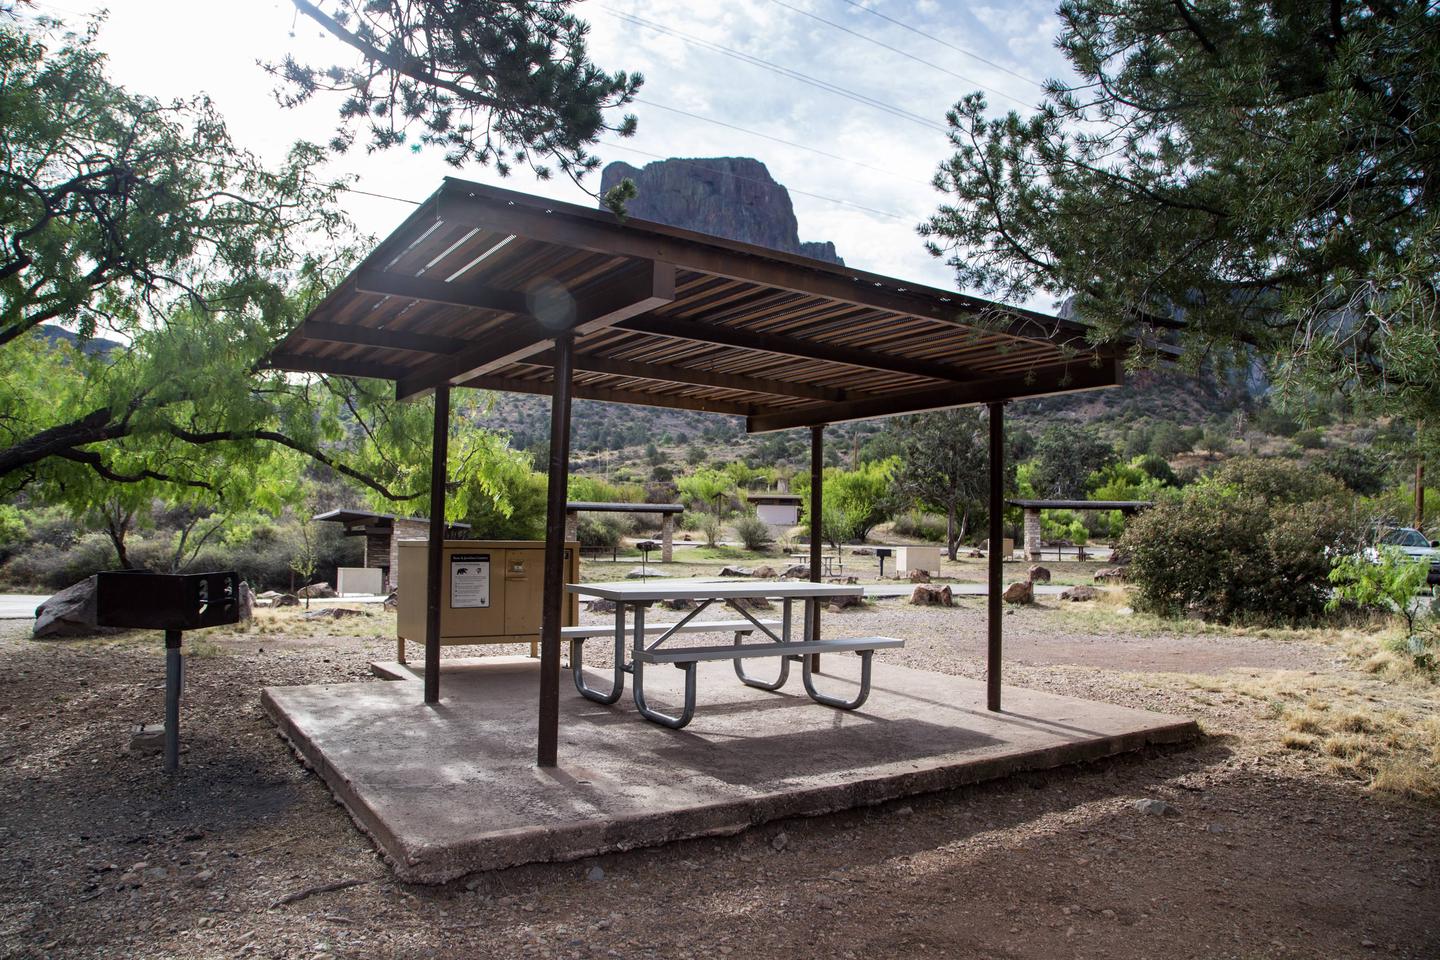 Chisos Basin Campsite #29 shade ramadaView showing shade ramada, grill, bear box, and picnic table